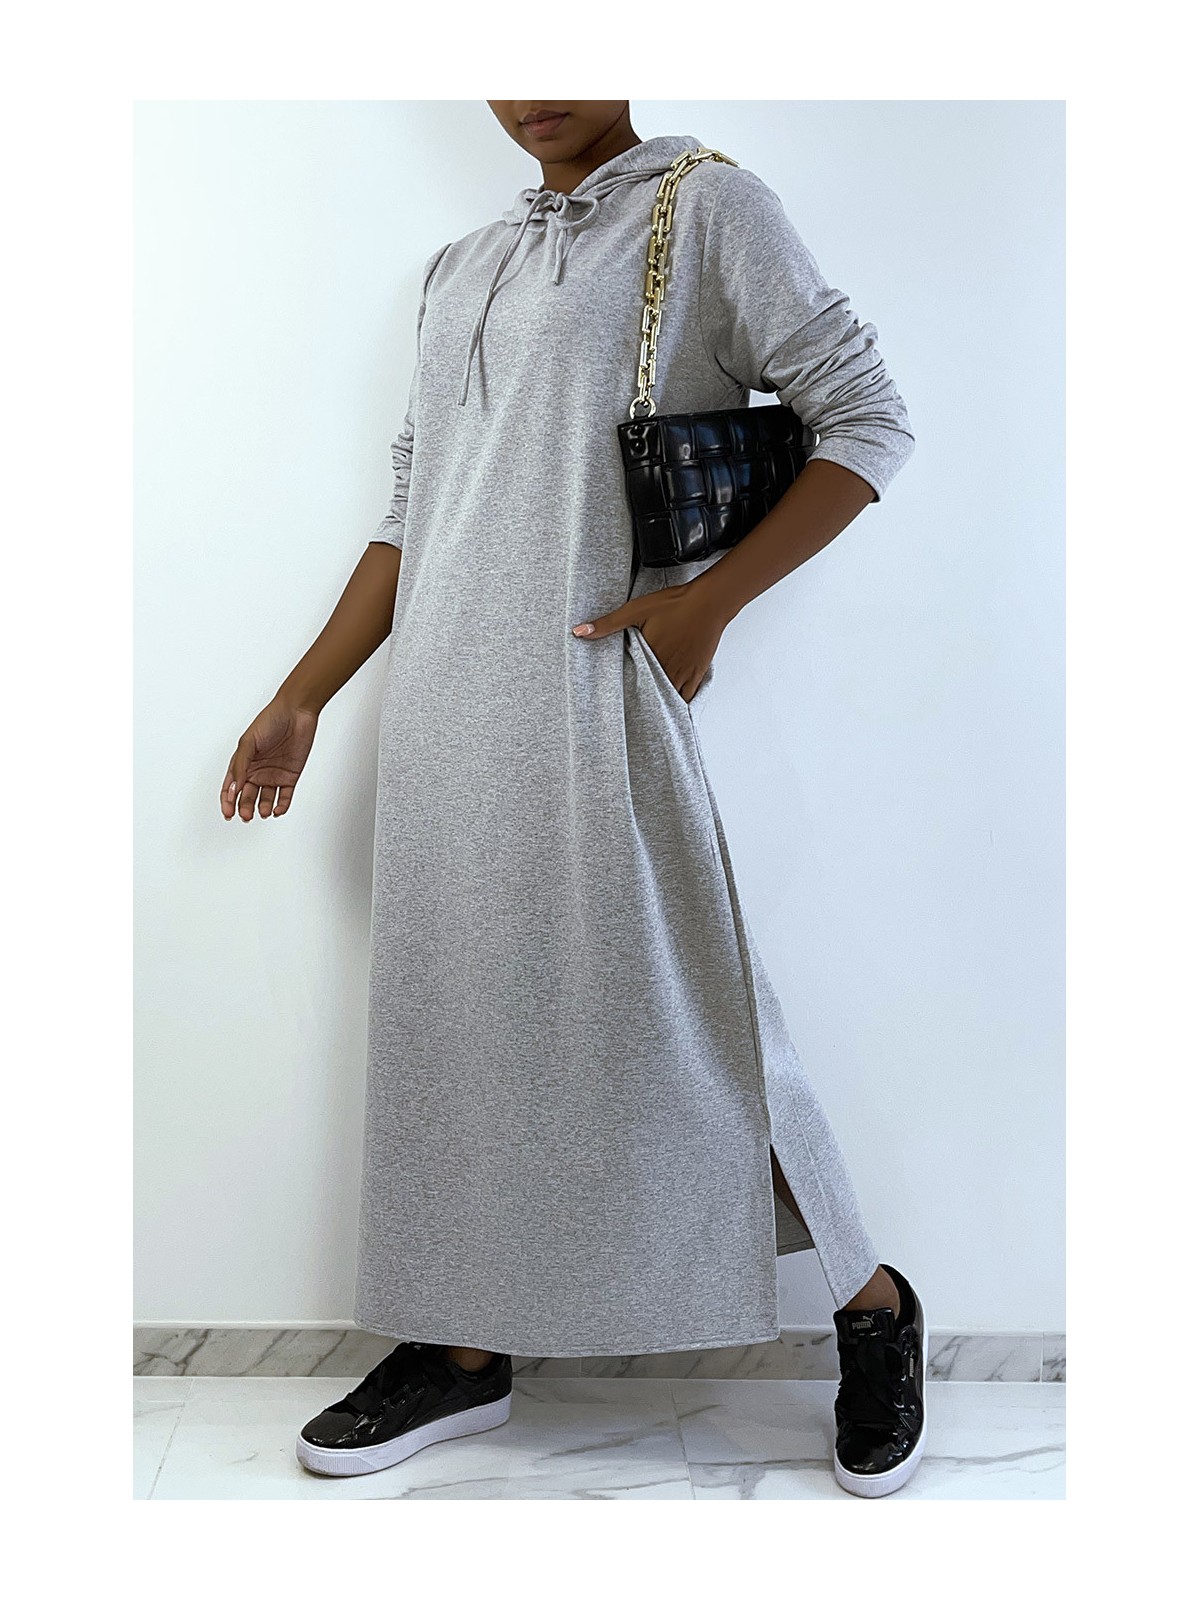 Longue robe sweat abaya grise à capuche - 1